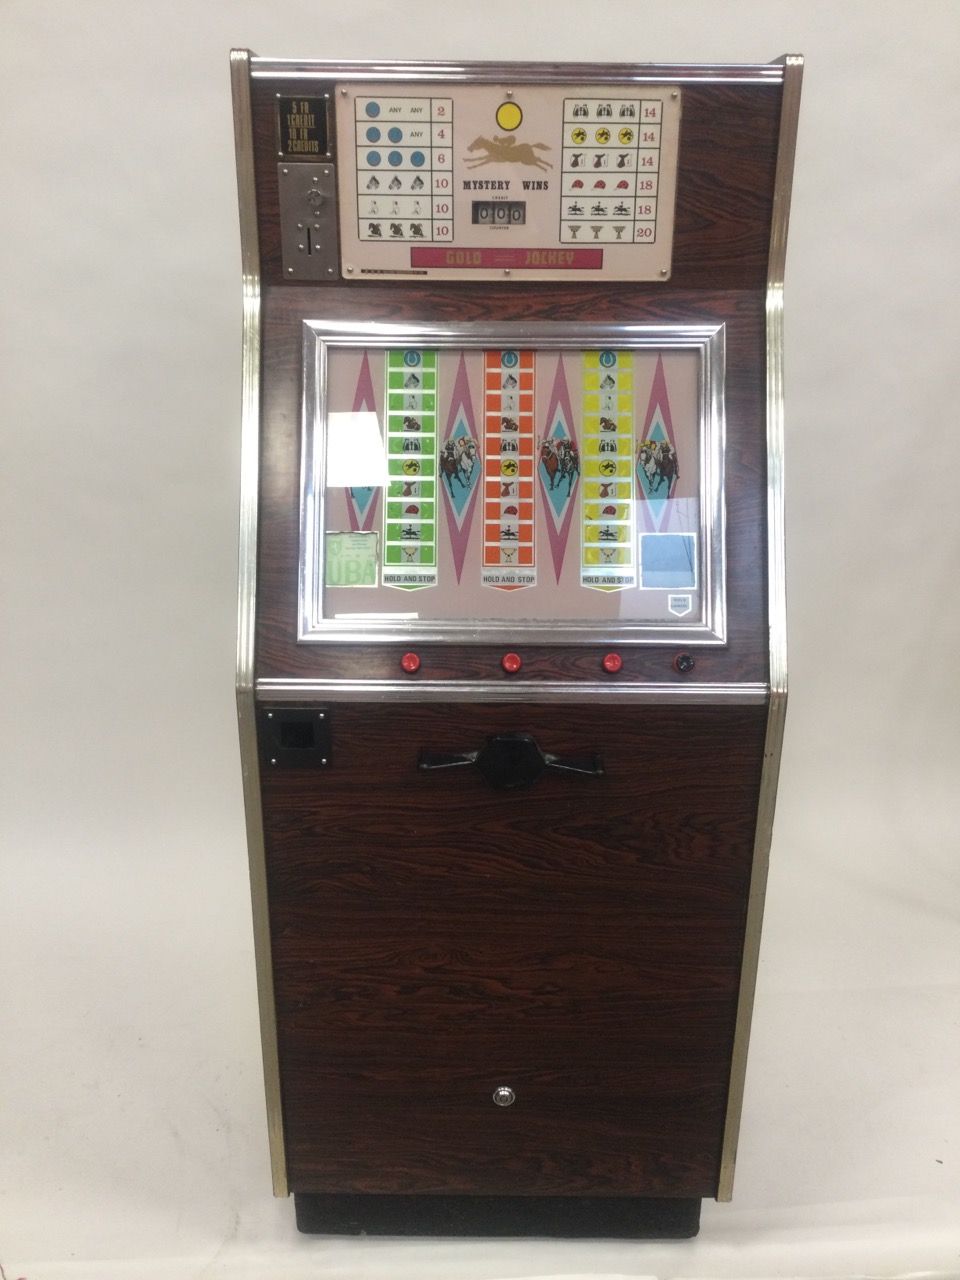 Null MYSTERY WINS GOLD JOCKEY 1973 Spielautomat Abmessung: h 155 b 62